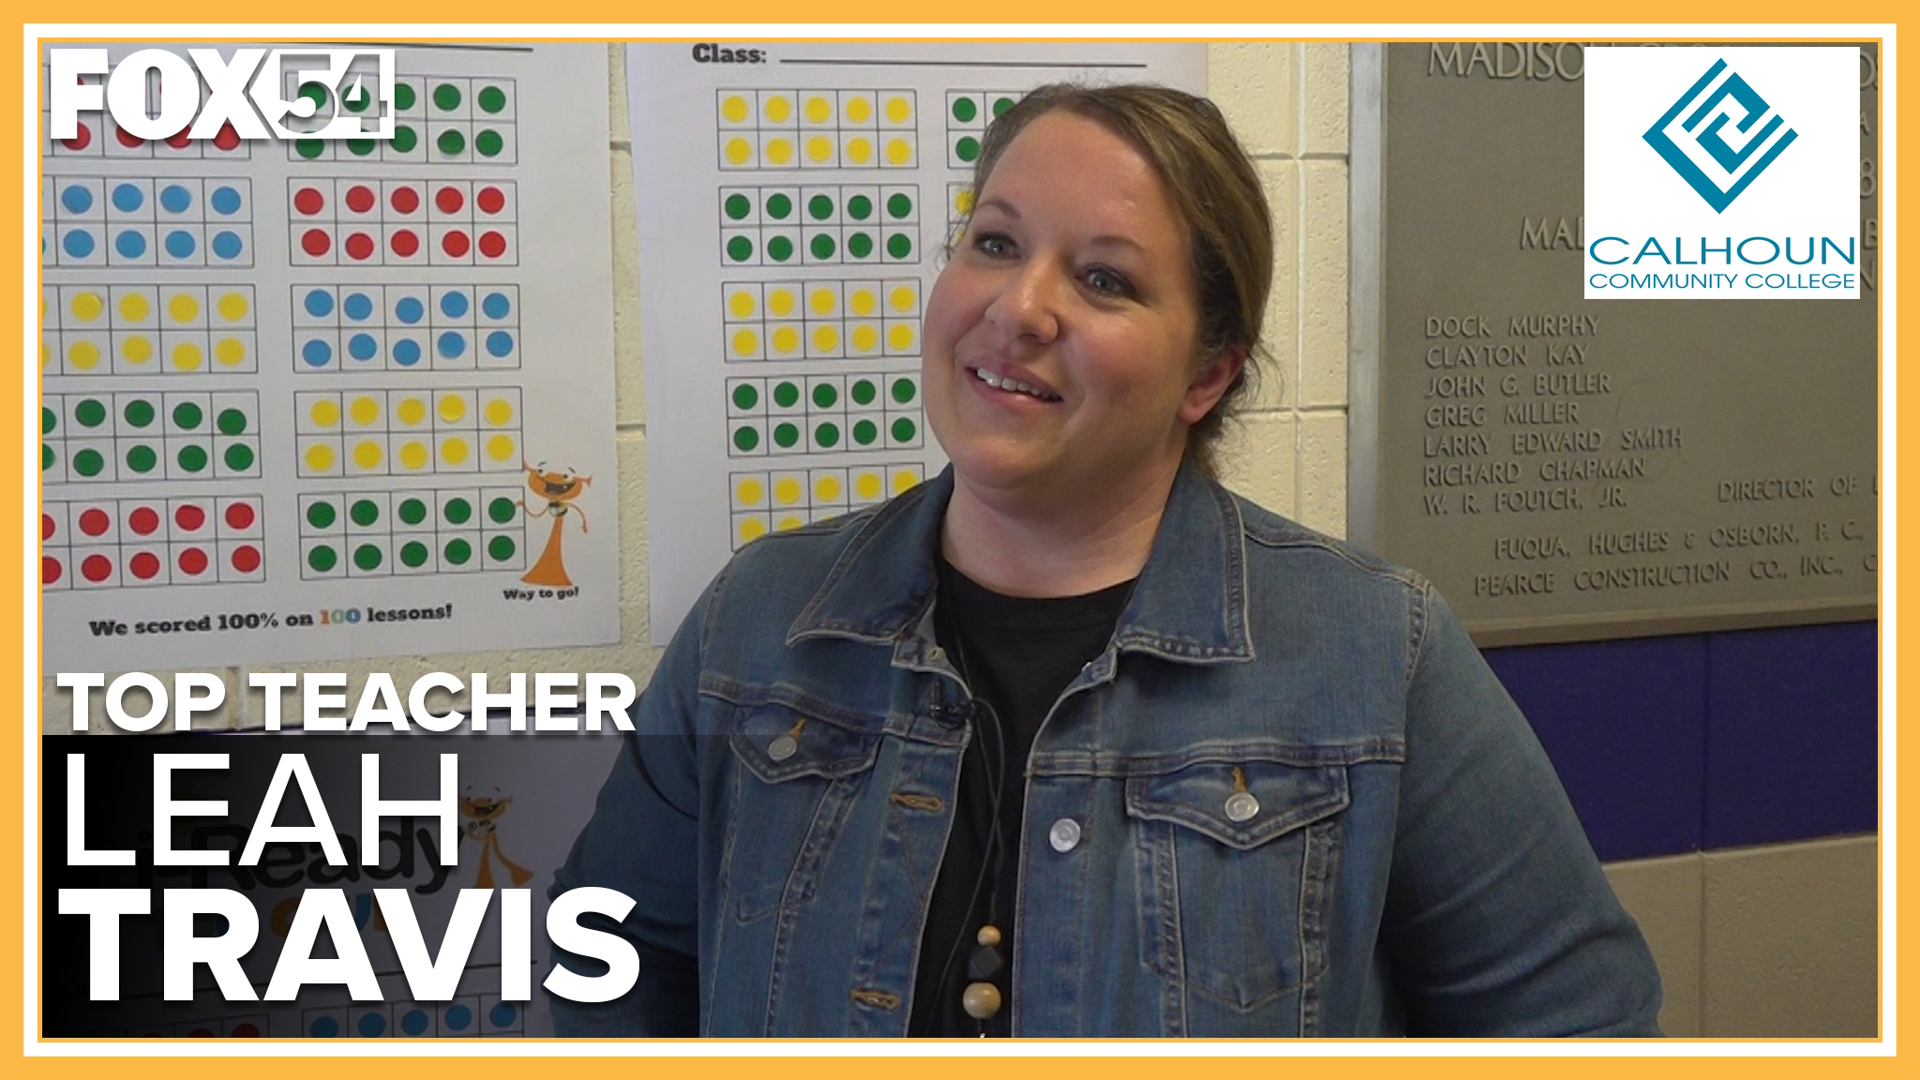 Mrs. Leah Travis has been a kindergarten teacher for 16 years at Madison Cross Roads Elementary School.